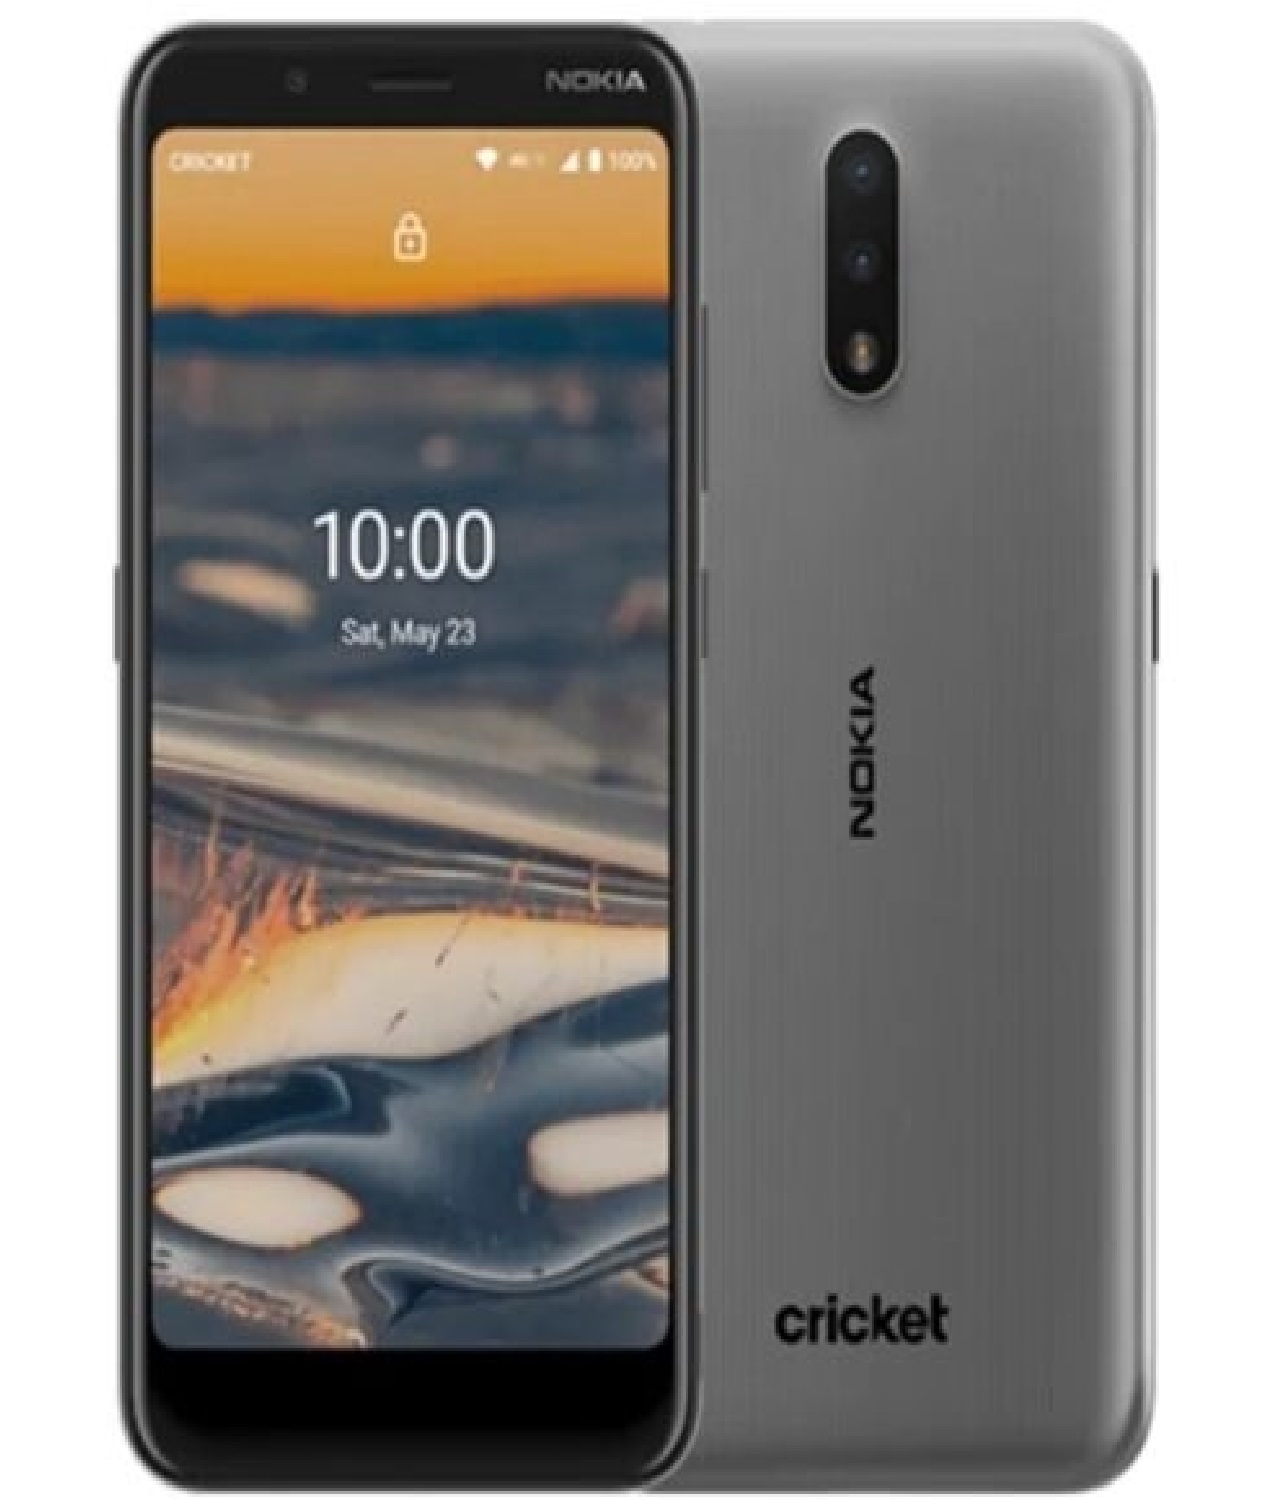 Nokia C2 Tennen 500x500 1